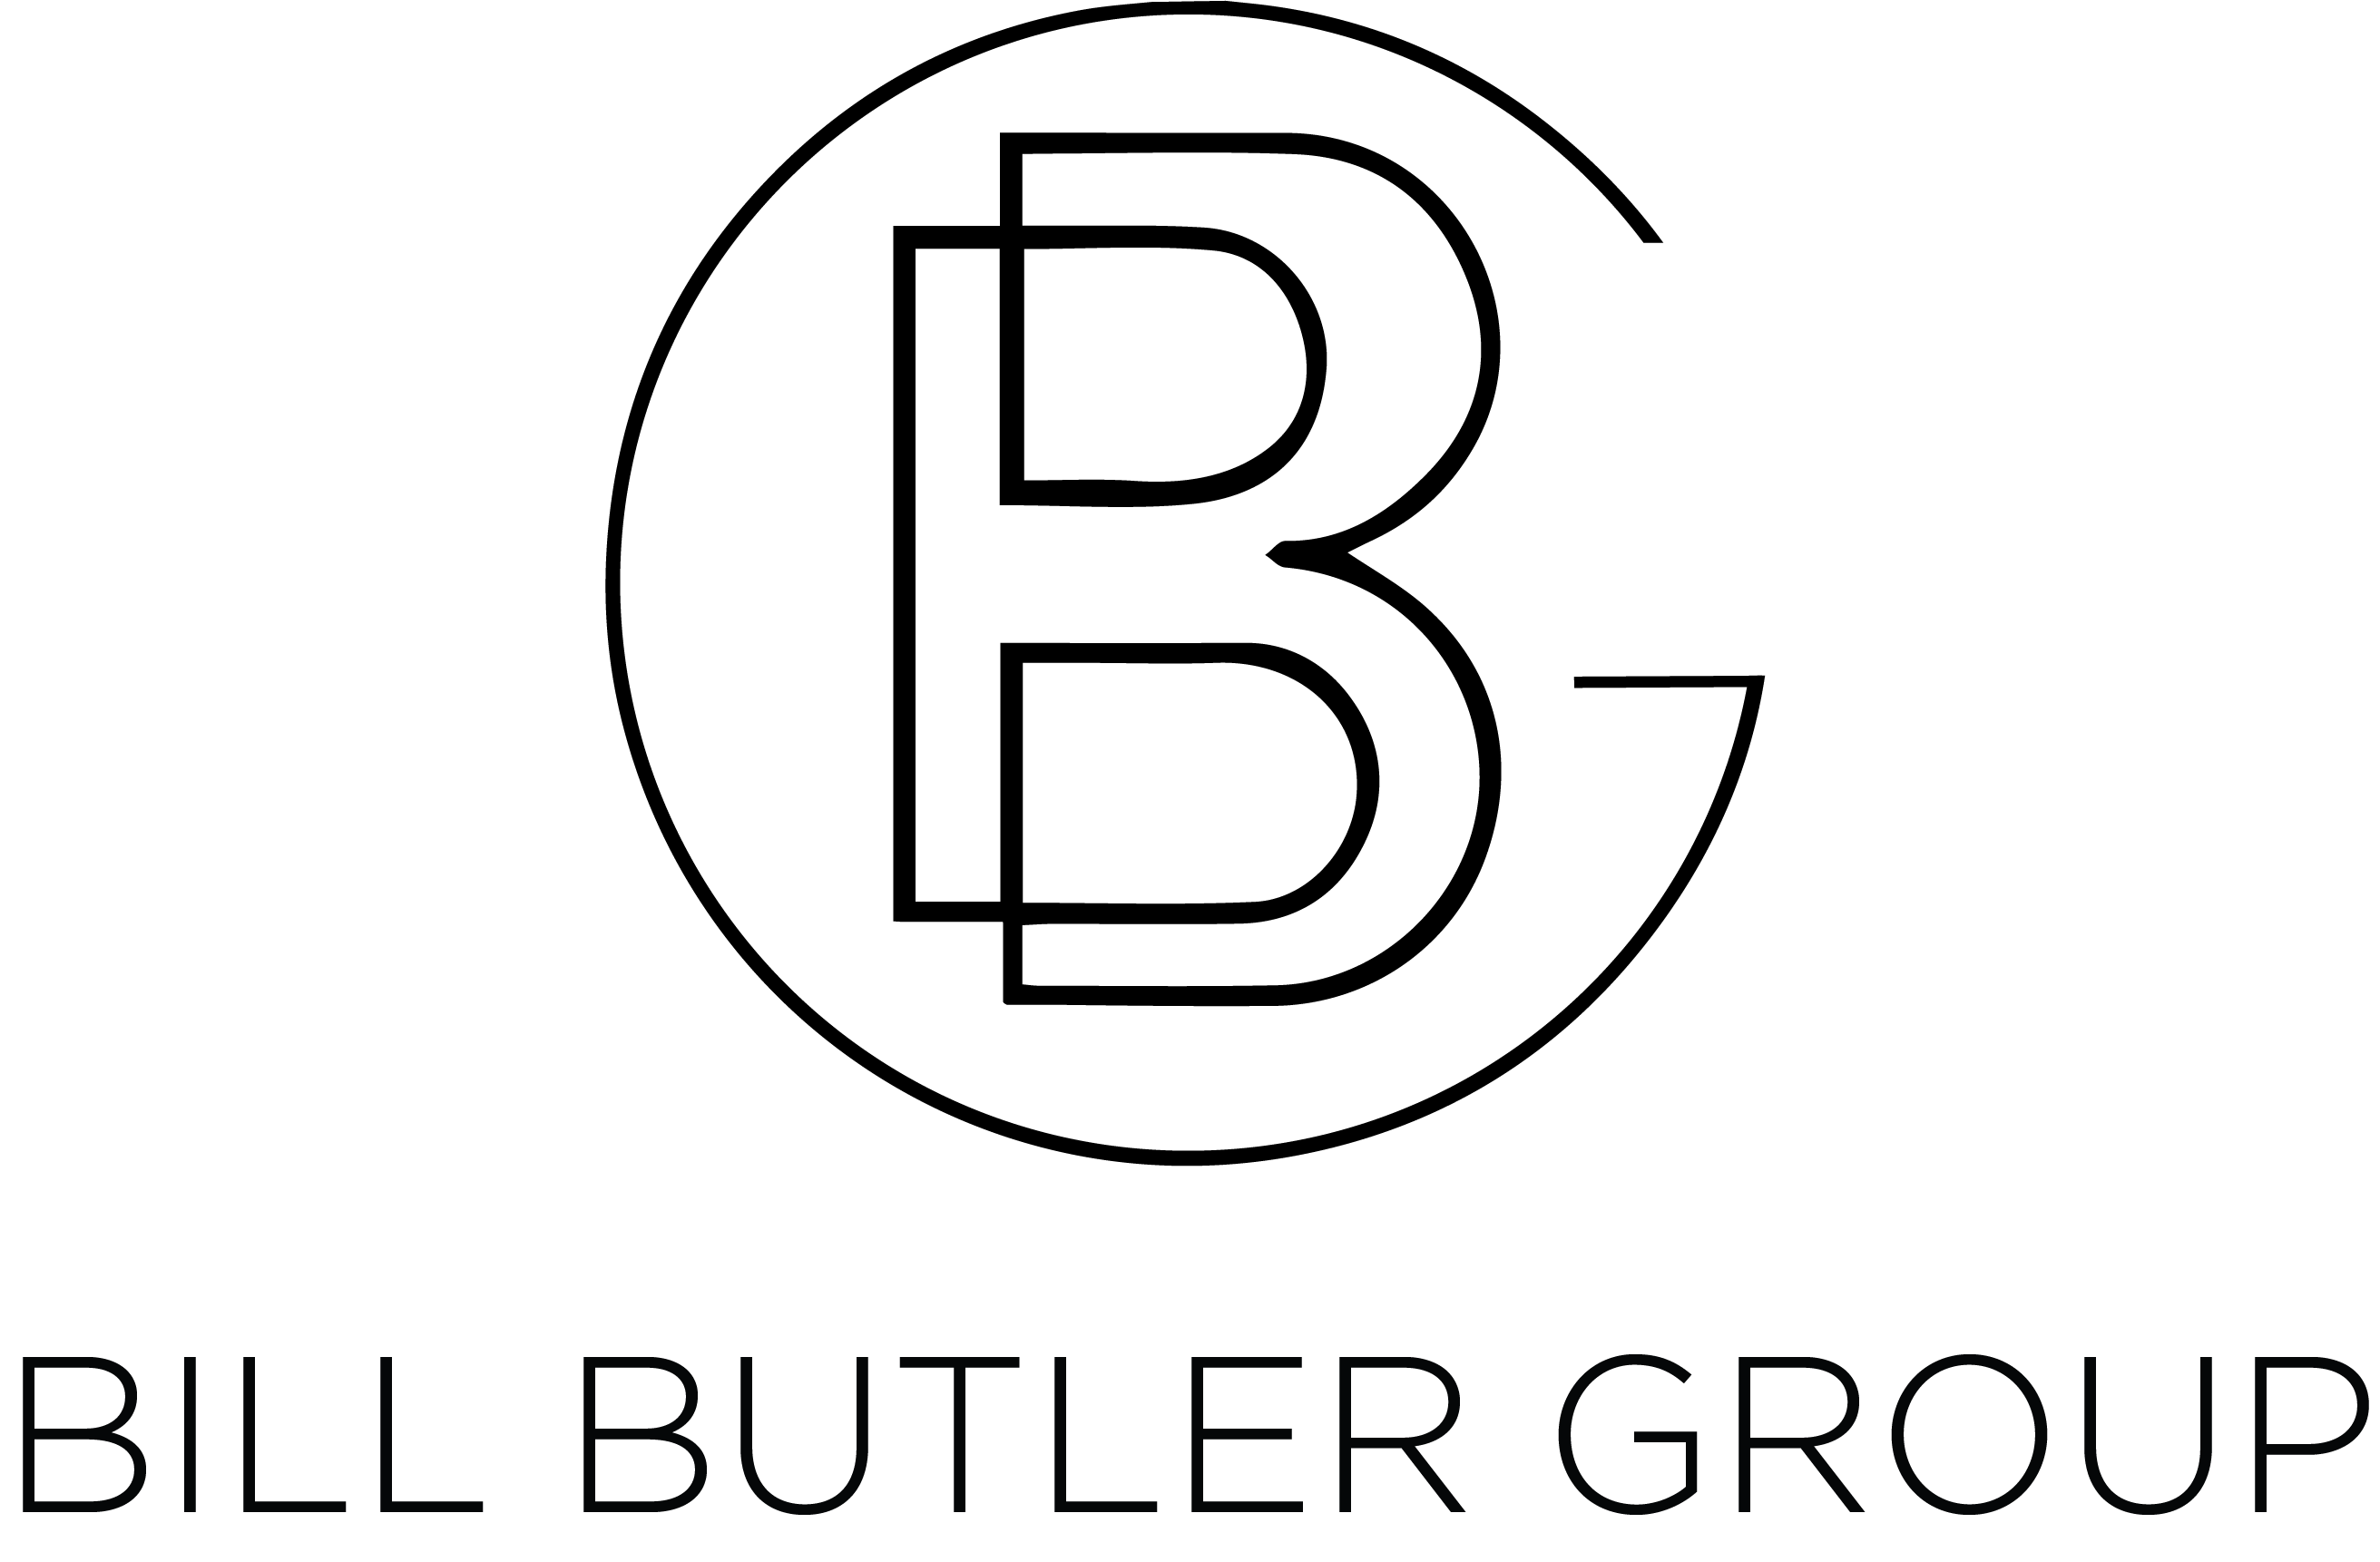 The Bill Butler Group